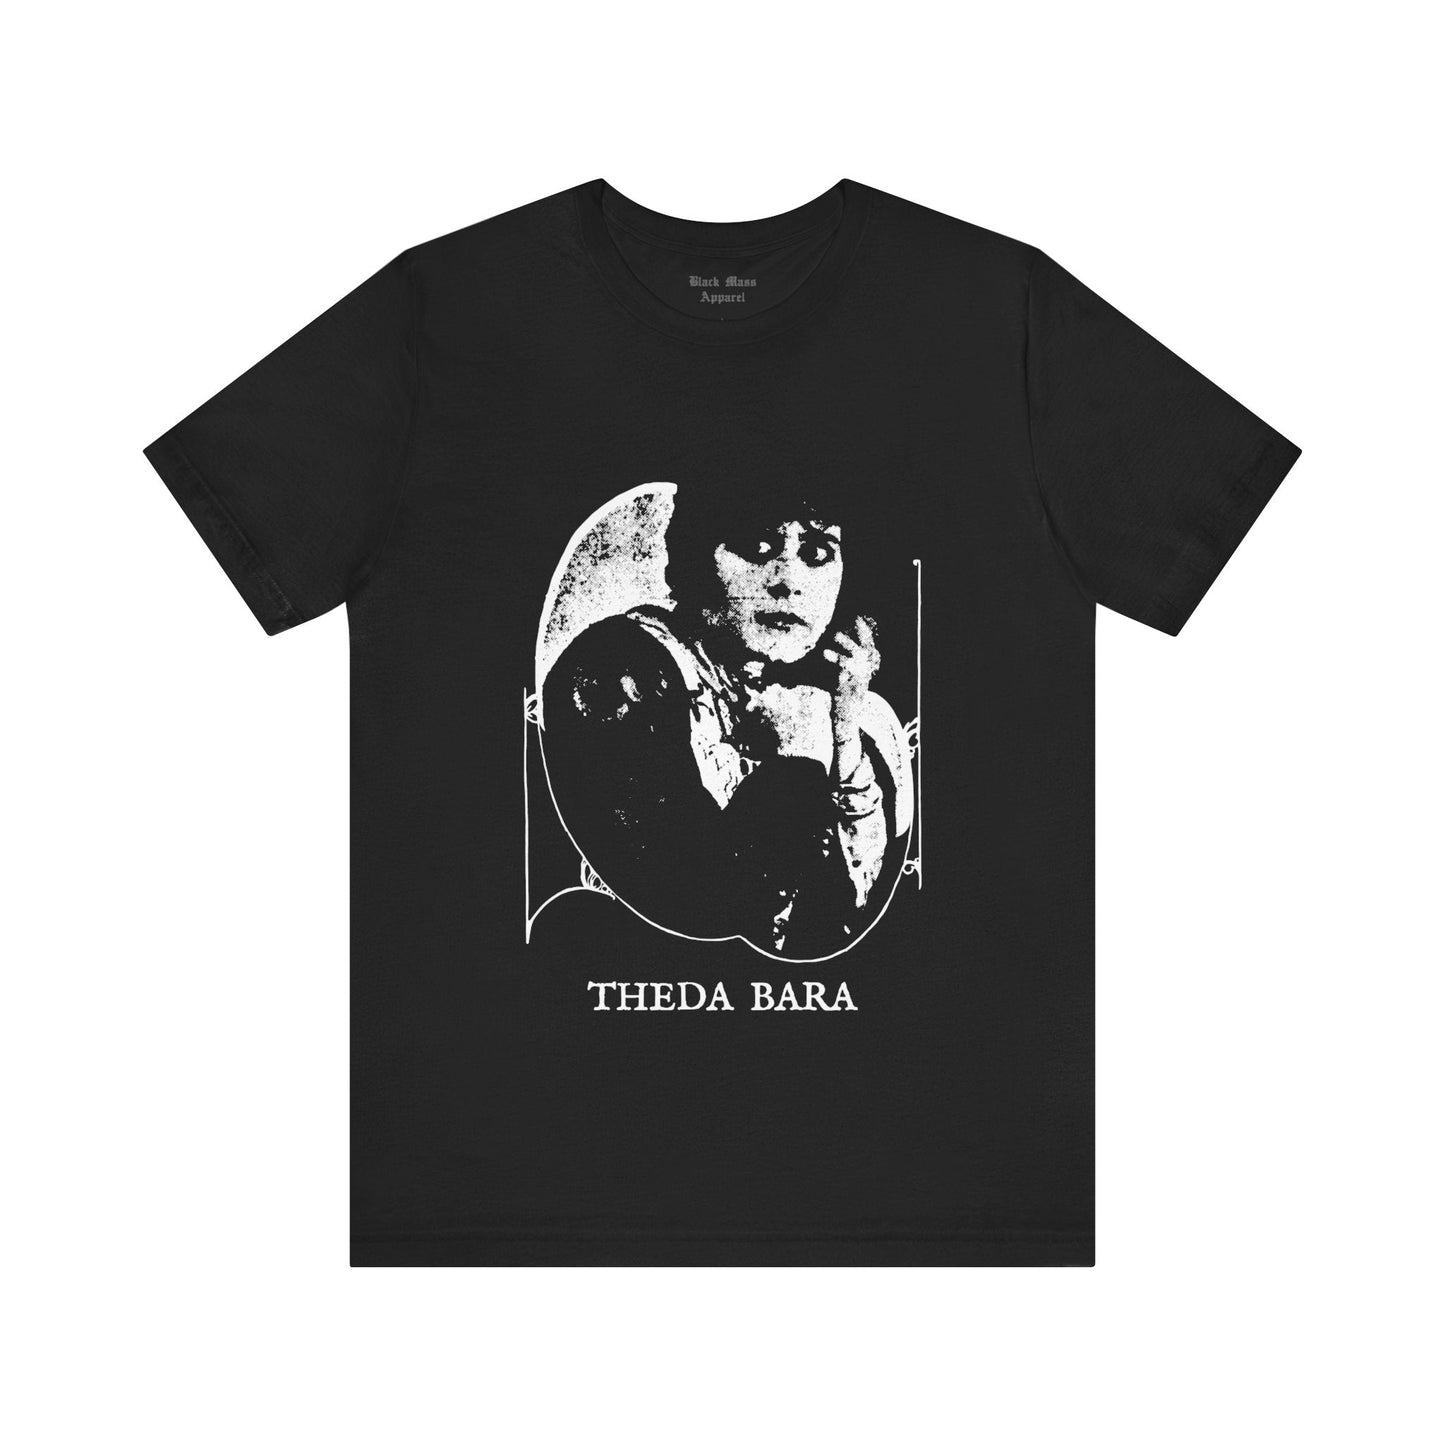 Theda Bara - Black Mass Apparel - T-Shirt